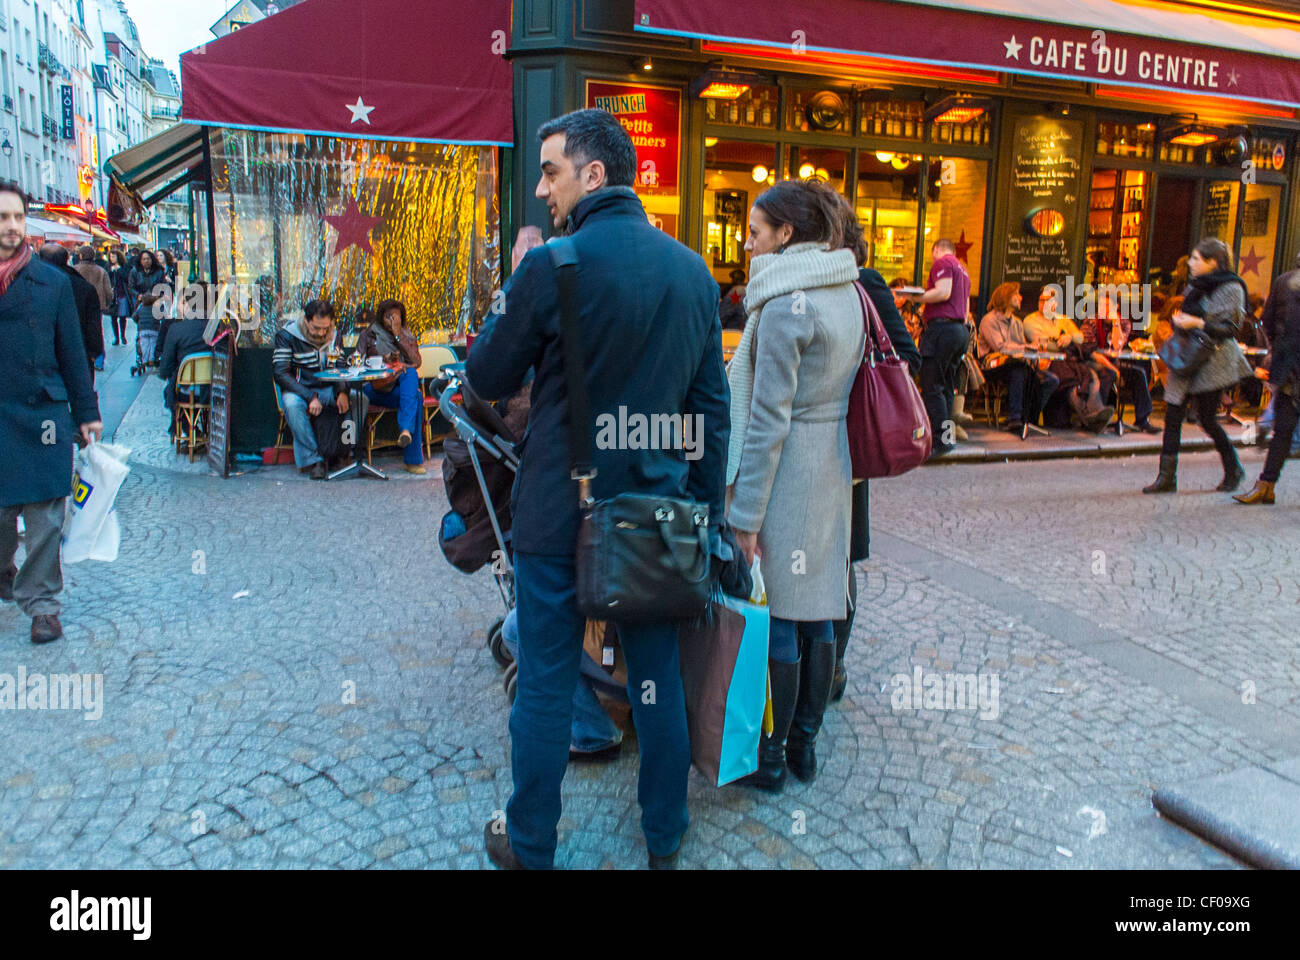 Paris cafe du centre hi-res stock photography and images - Alamy